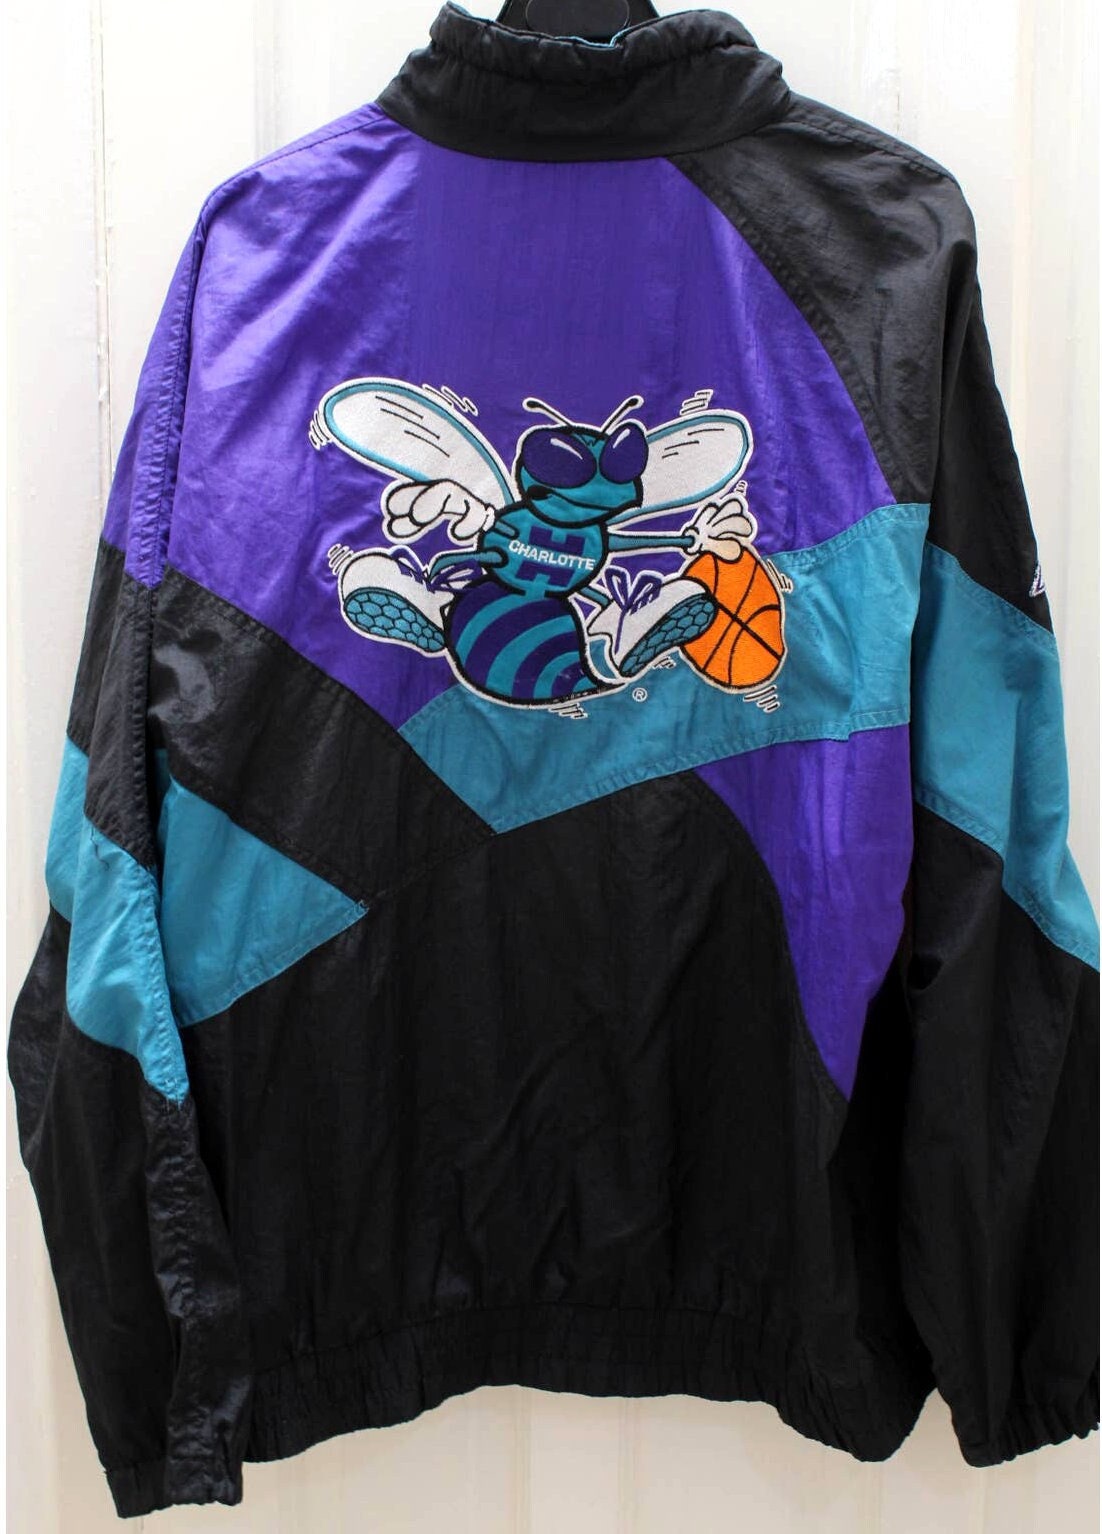 Vintage Charlotte Hornets Jacket Competitor Size Large L NBA Basketball North Carolina NC J Cole Windbreaker Light Rain Coat